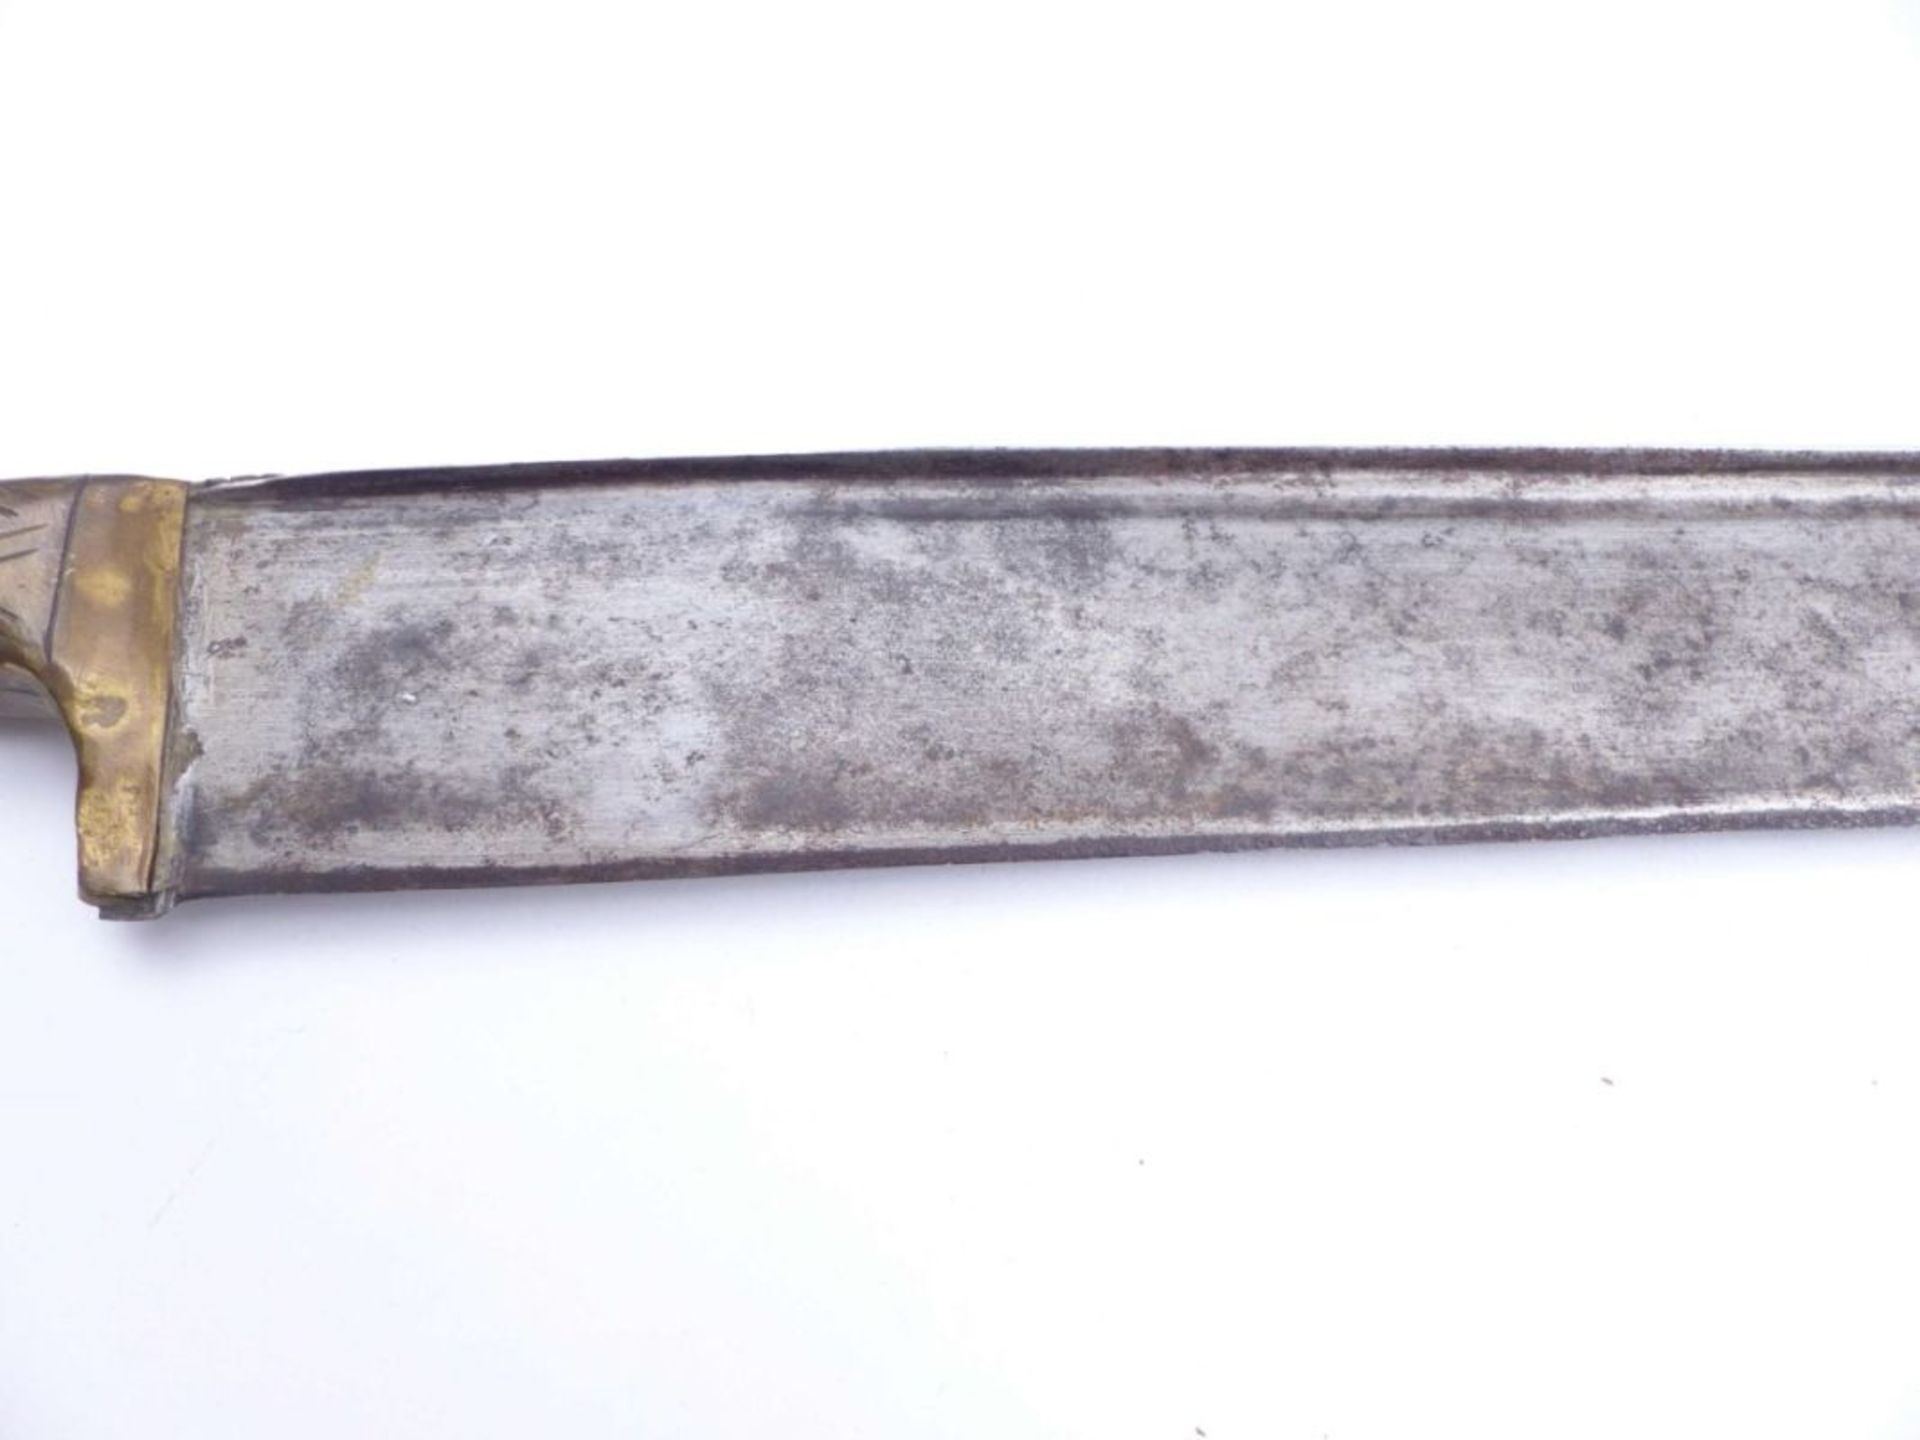 Khyber knife - Image 3 of 3